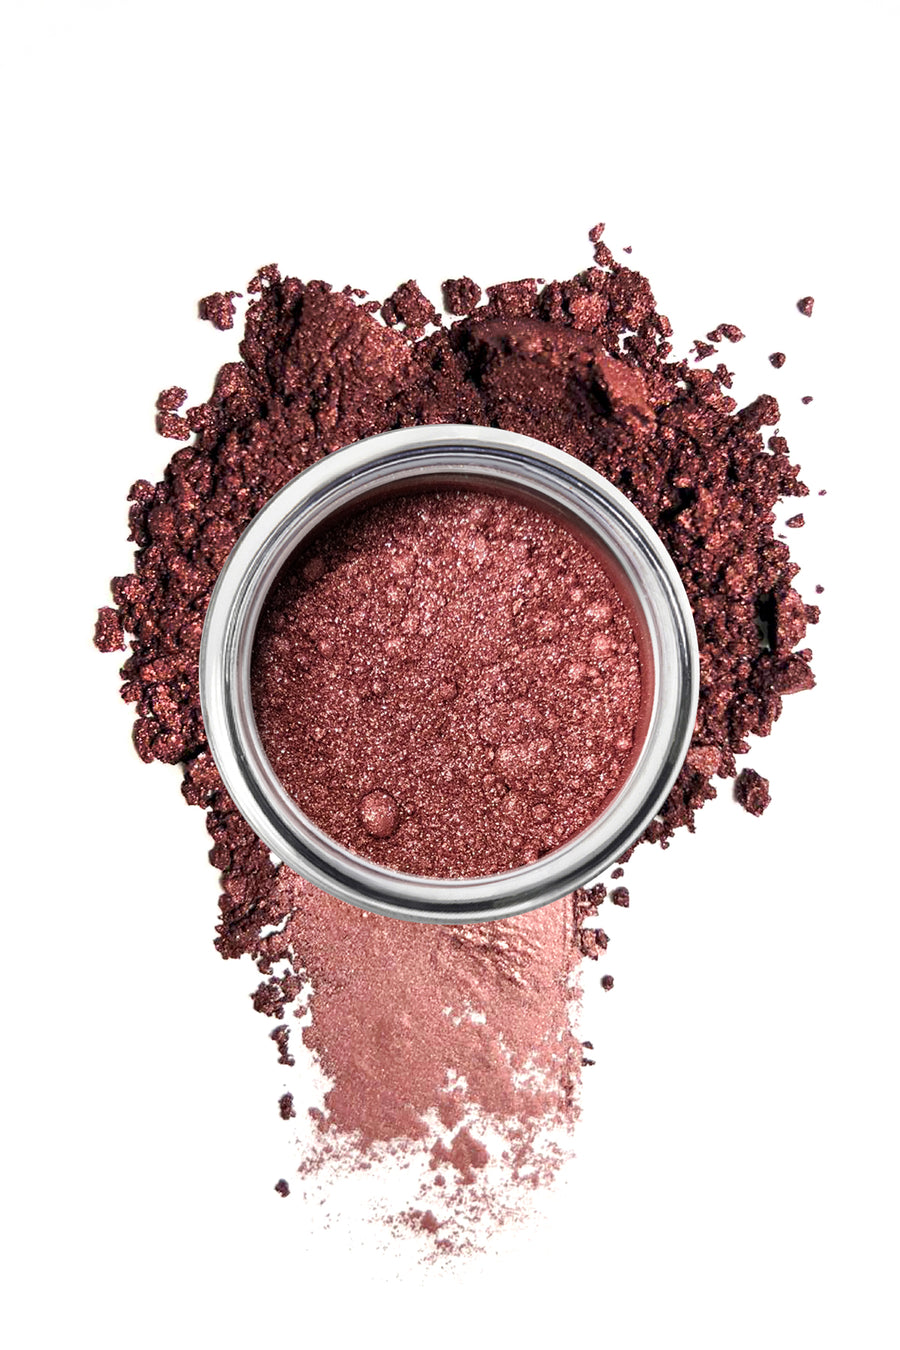 Shimmer Eyeshadow #6 - Pink Metal - Blend Mineral Cosmetics